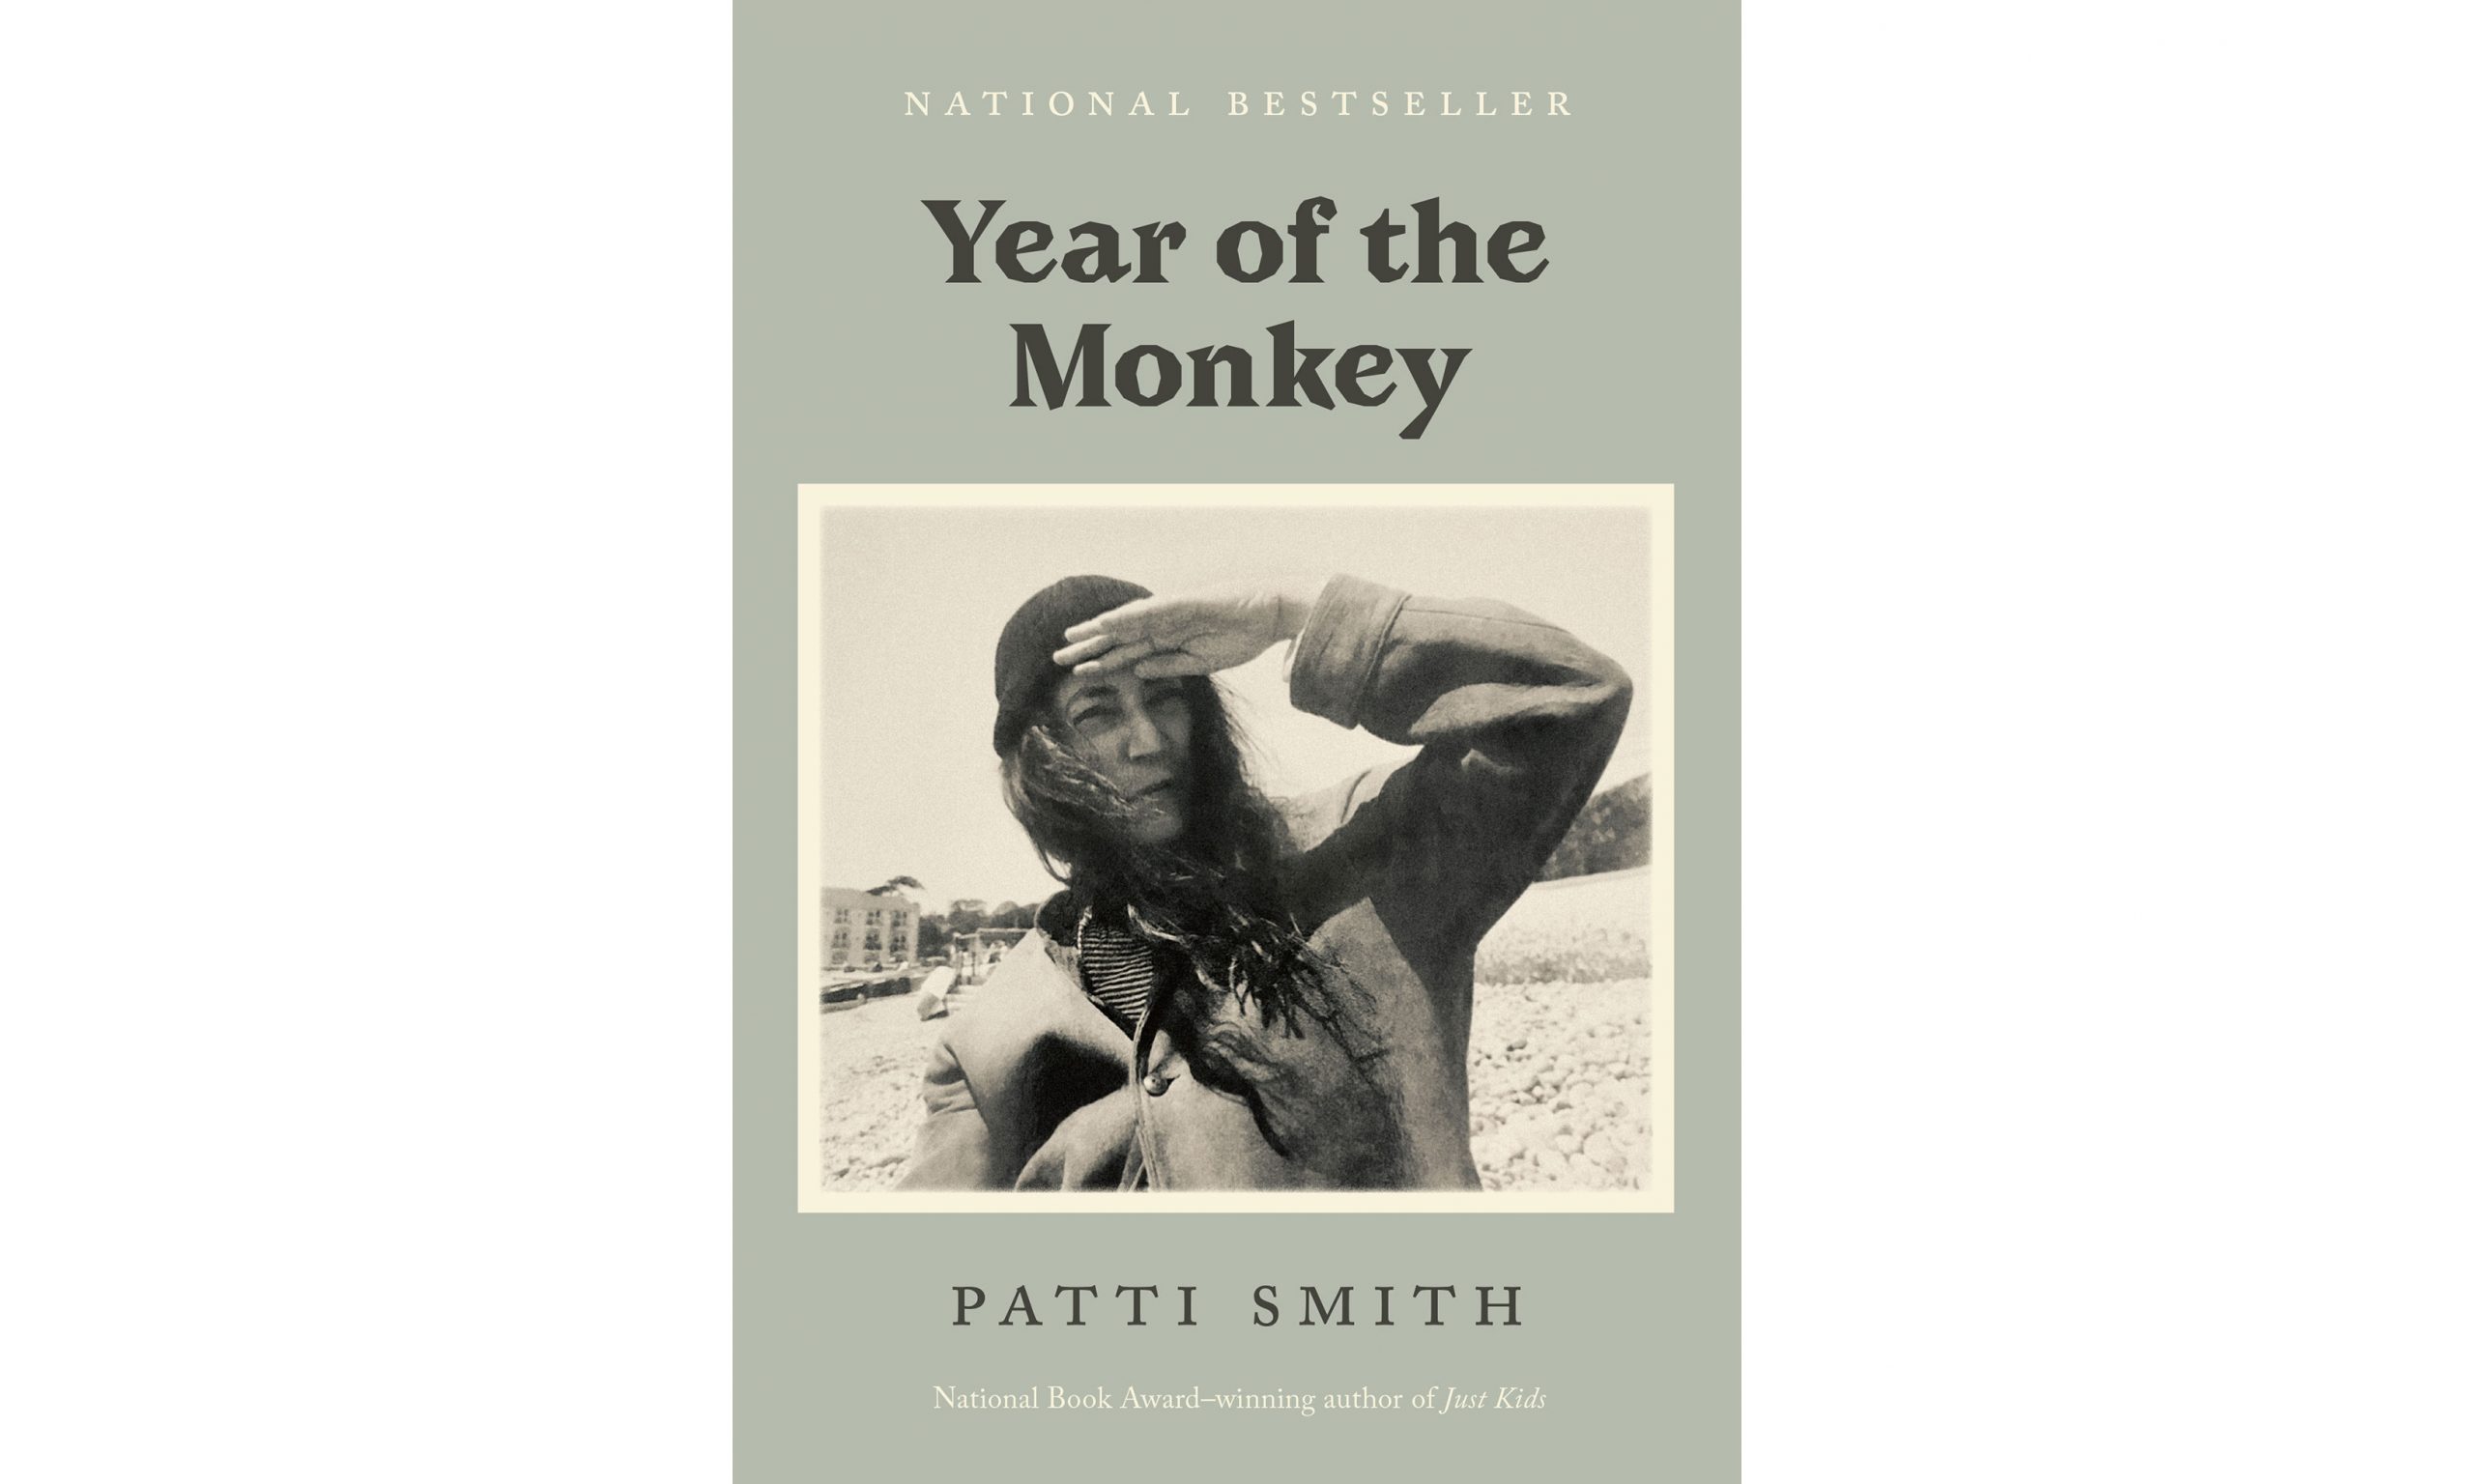 Patti Smith 回忆录《Year of the Monkey》将于九月全新推出平装版